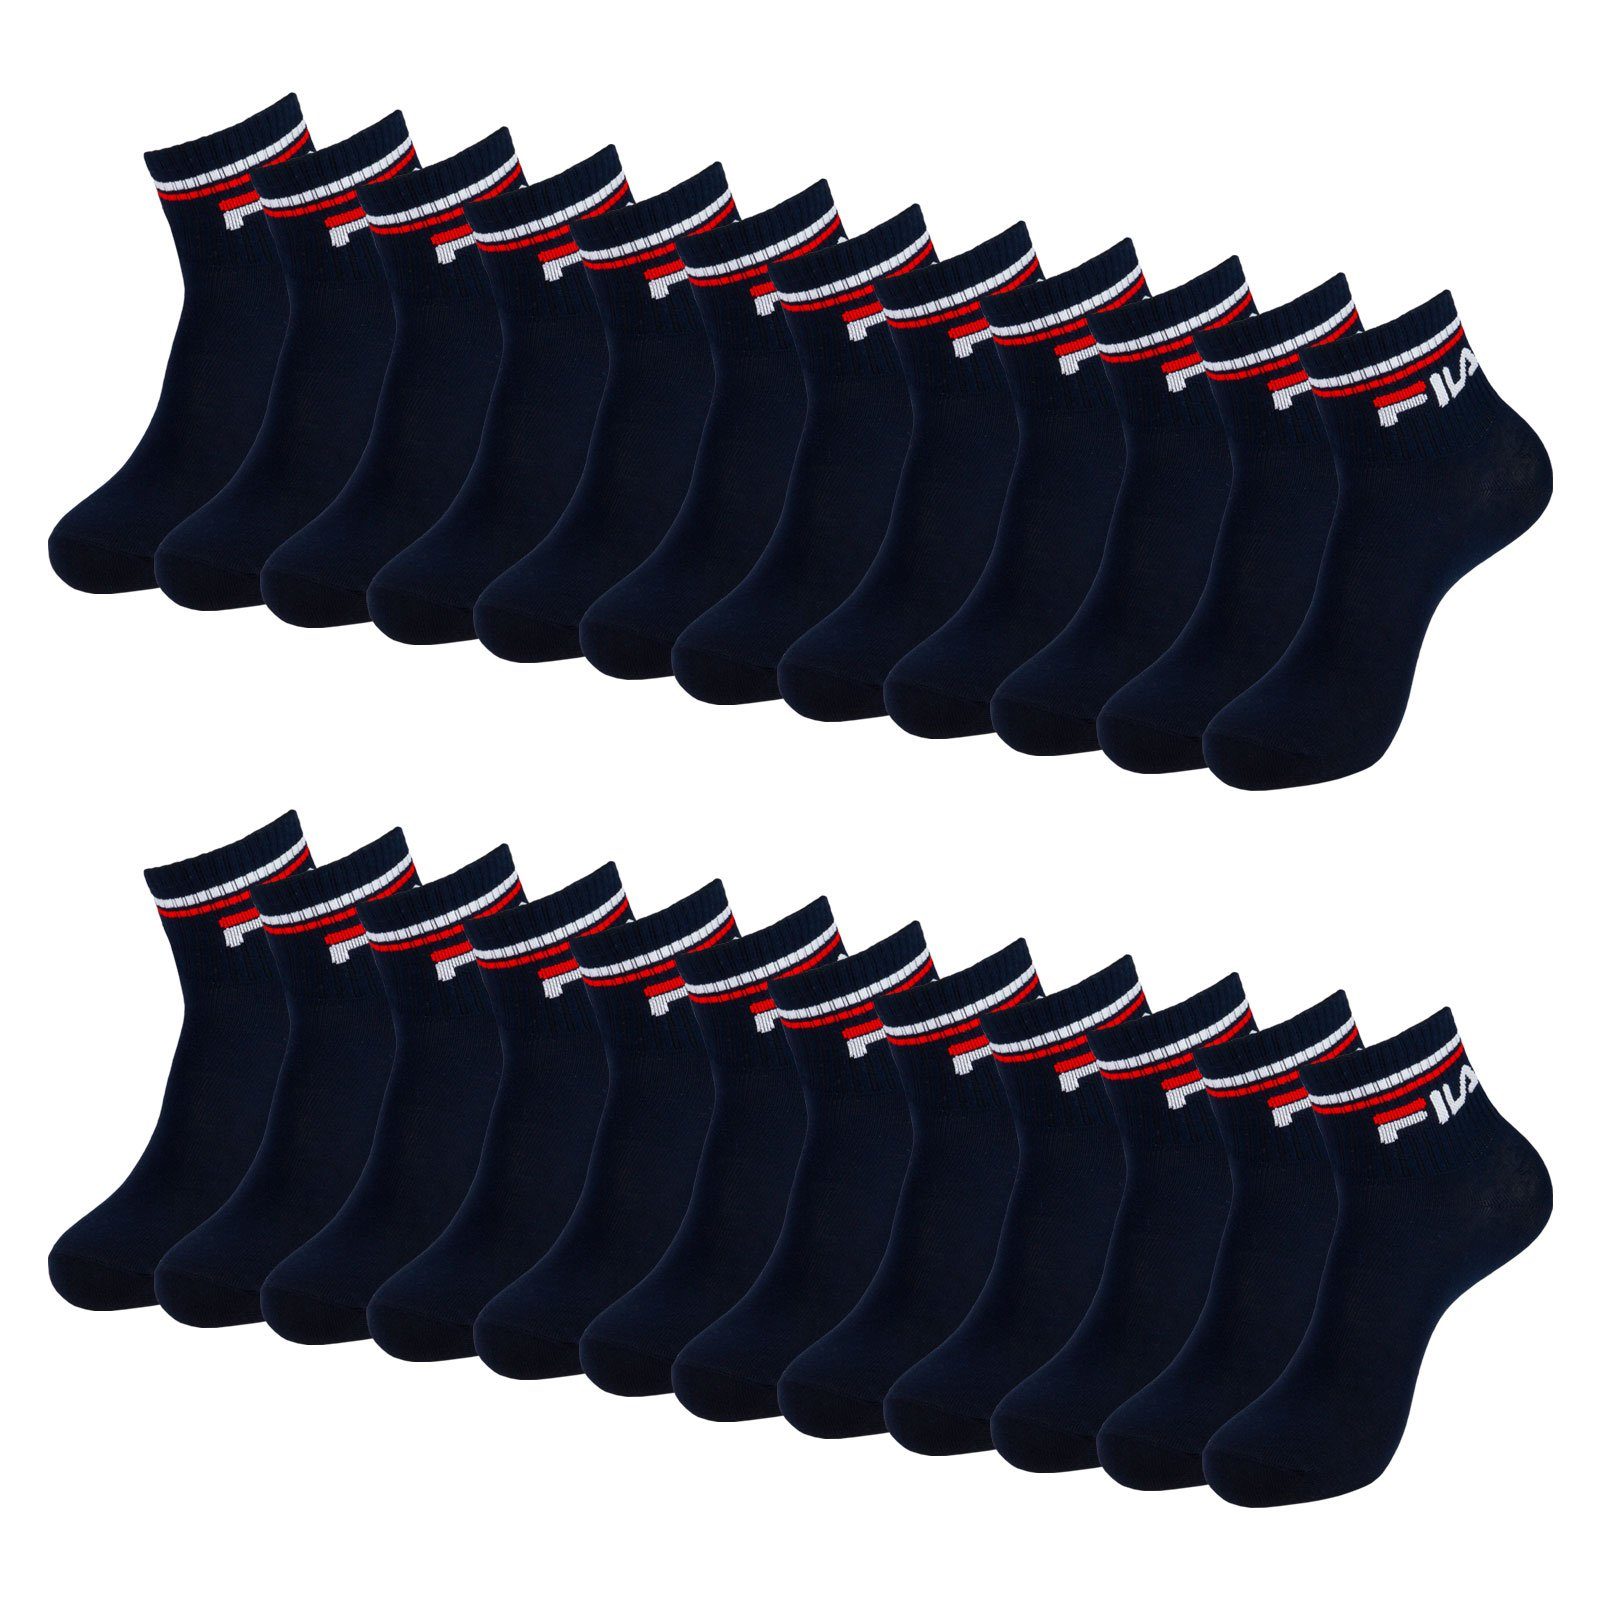 Fila Kurzsocken Quarter Socks Calza (12-Paar) im sportlichen Look mit Rippbündchen 321 navy